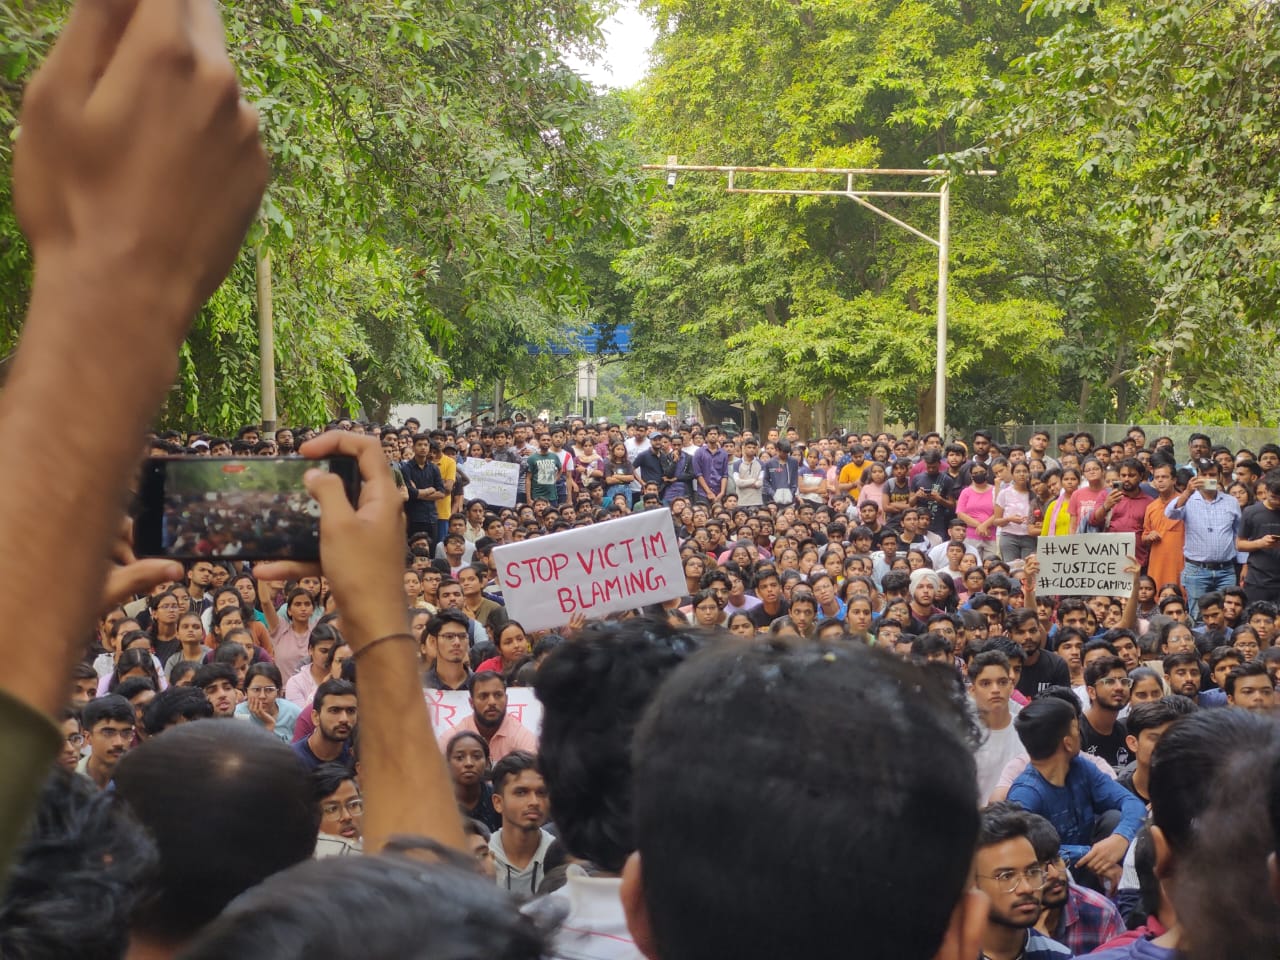 iit bhu, student protest, director, Varanasi, campus